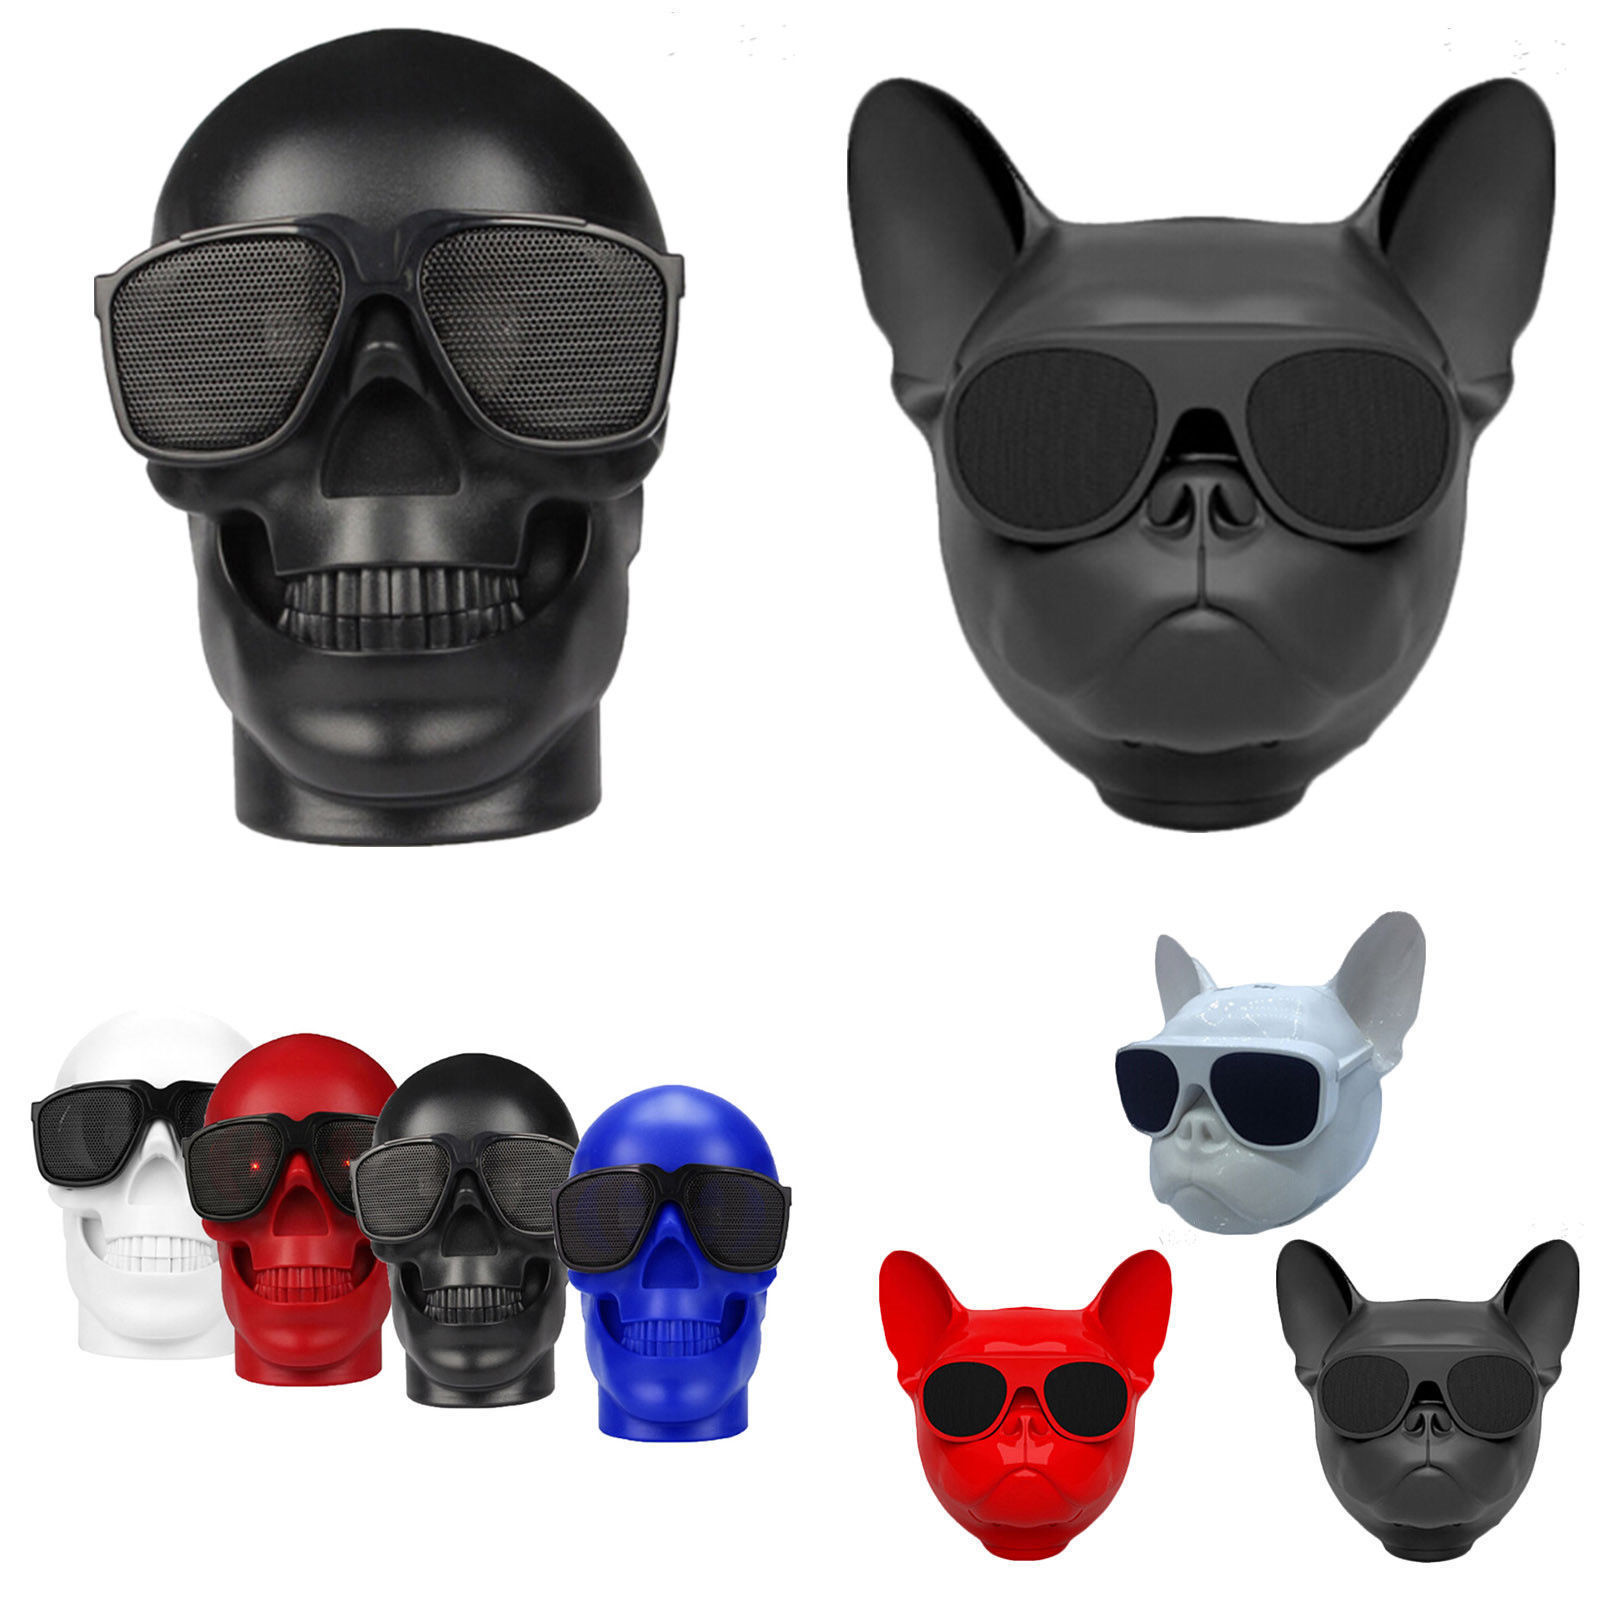 Portable Skull Head +Bulldog electroplate Wireless Bluetooth Bass Stereo Speaker